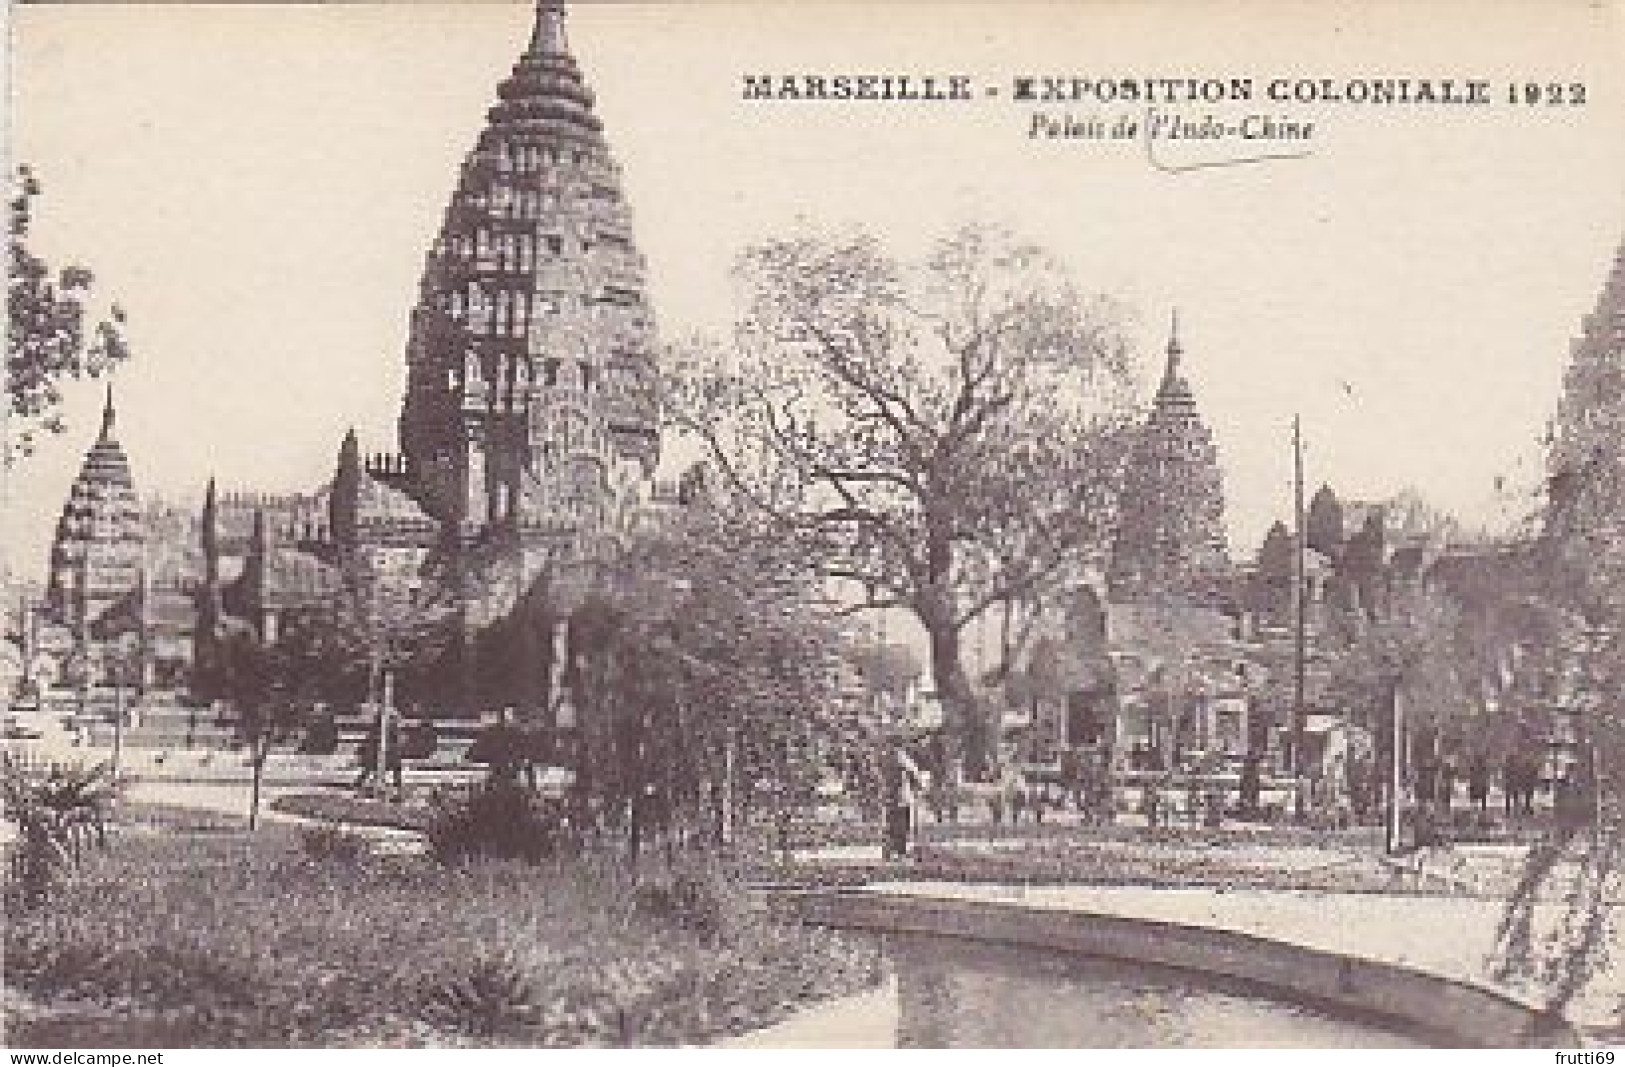 AK 216701 FRANCE - Marseille - Expoition Coloniale 1922 - Palais De L'Indo-Chine - Expositions Coloniales 1906 - 1922